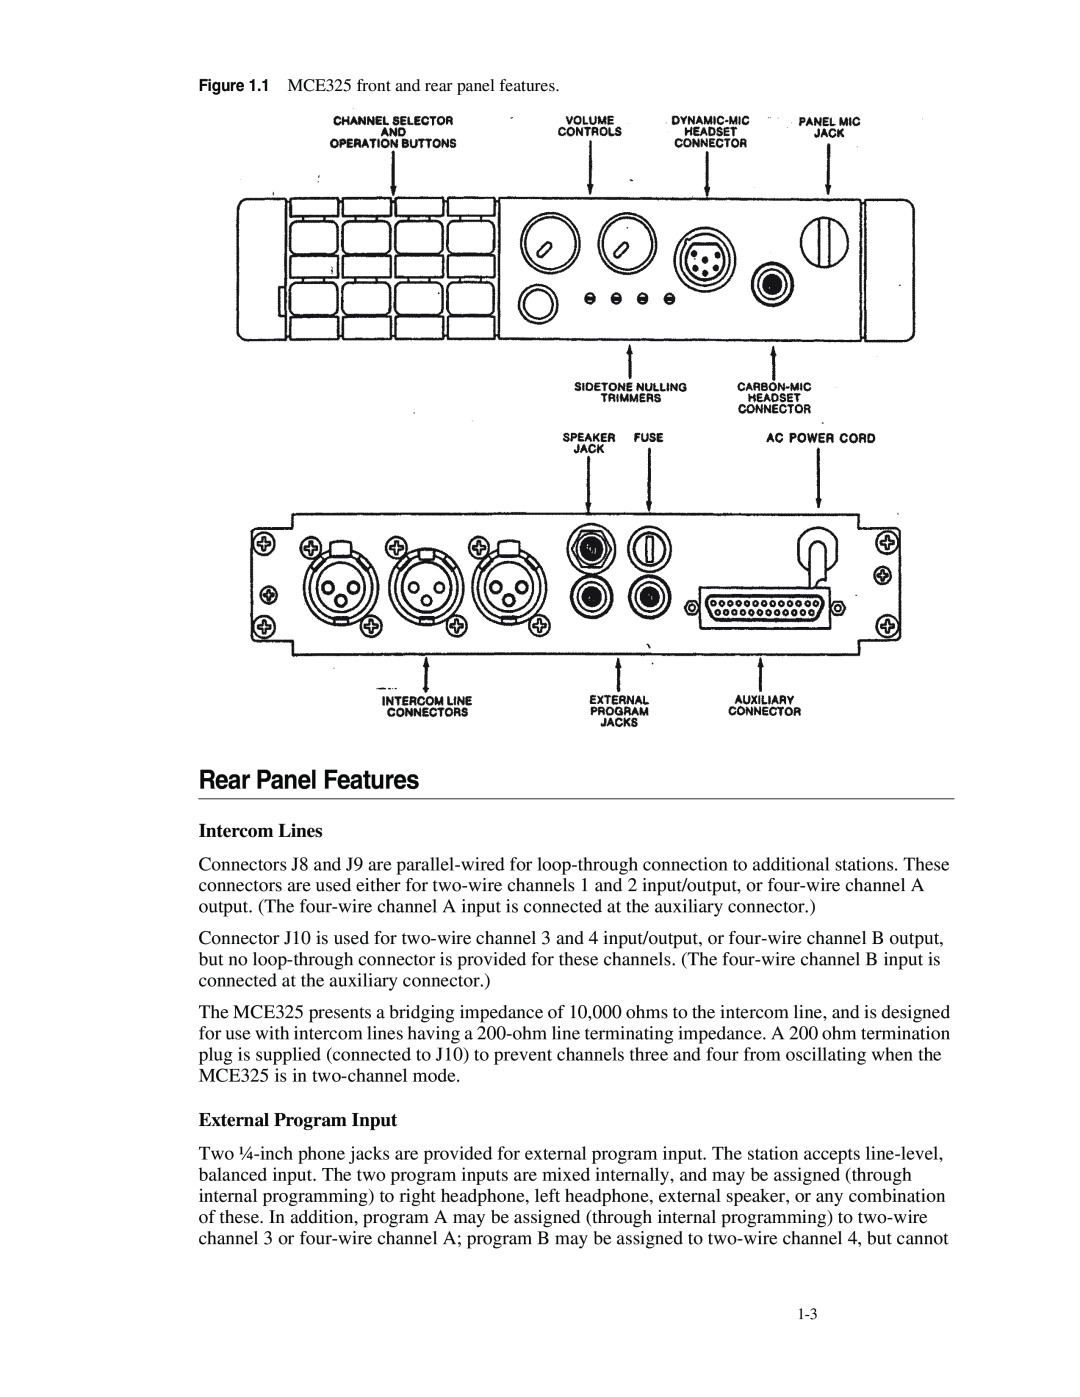 Telex MCE325 manual Rear Panel Features, Intercom Lines, External Program Input 